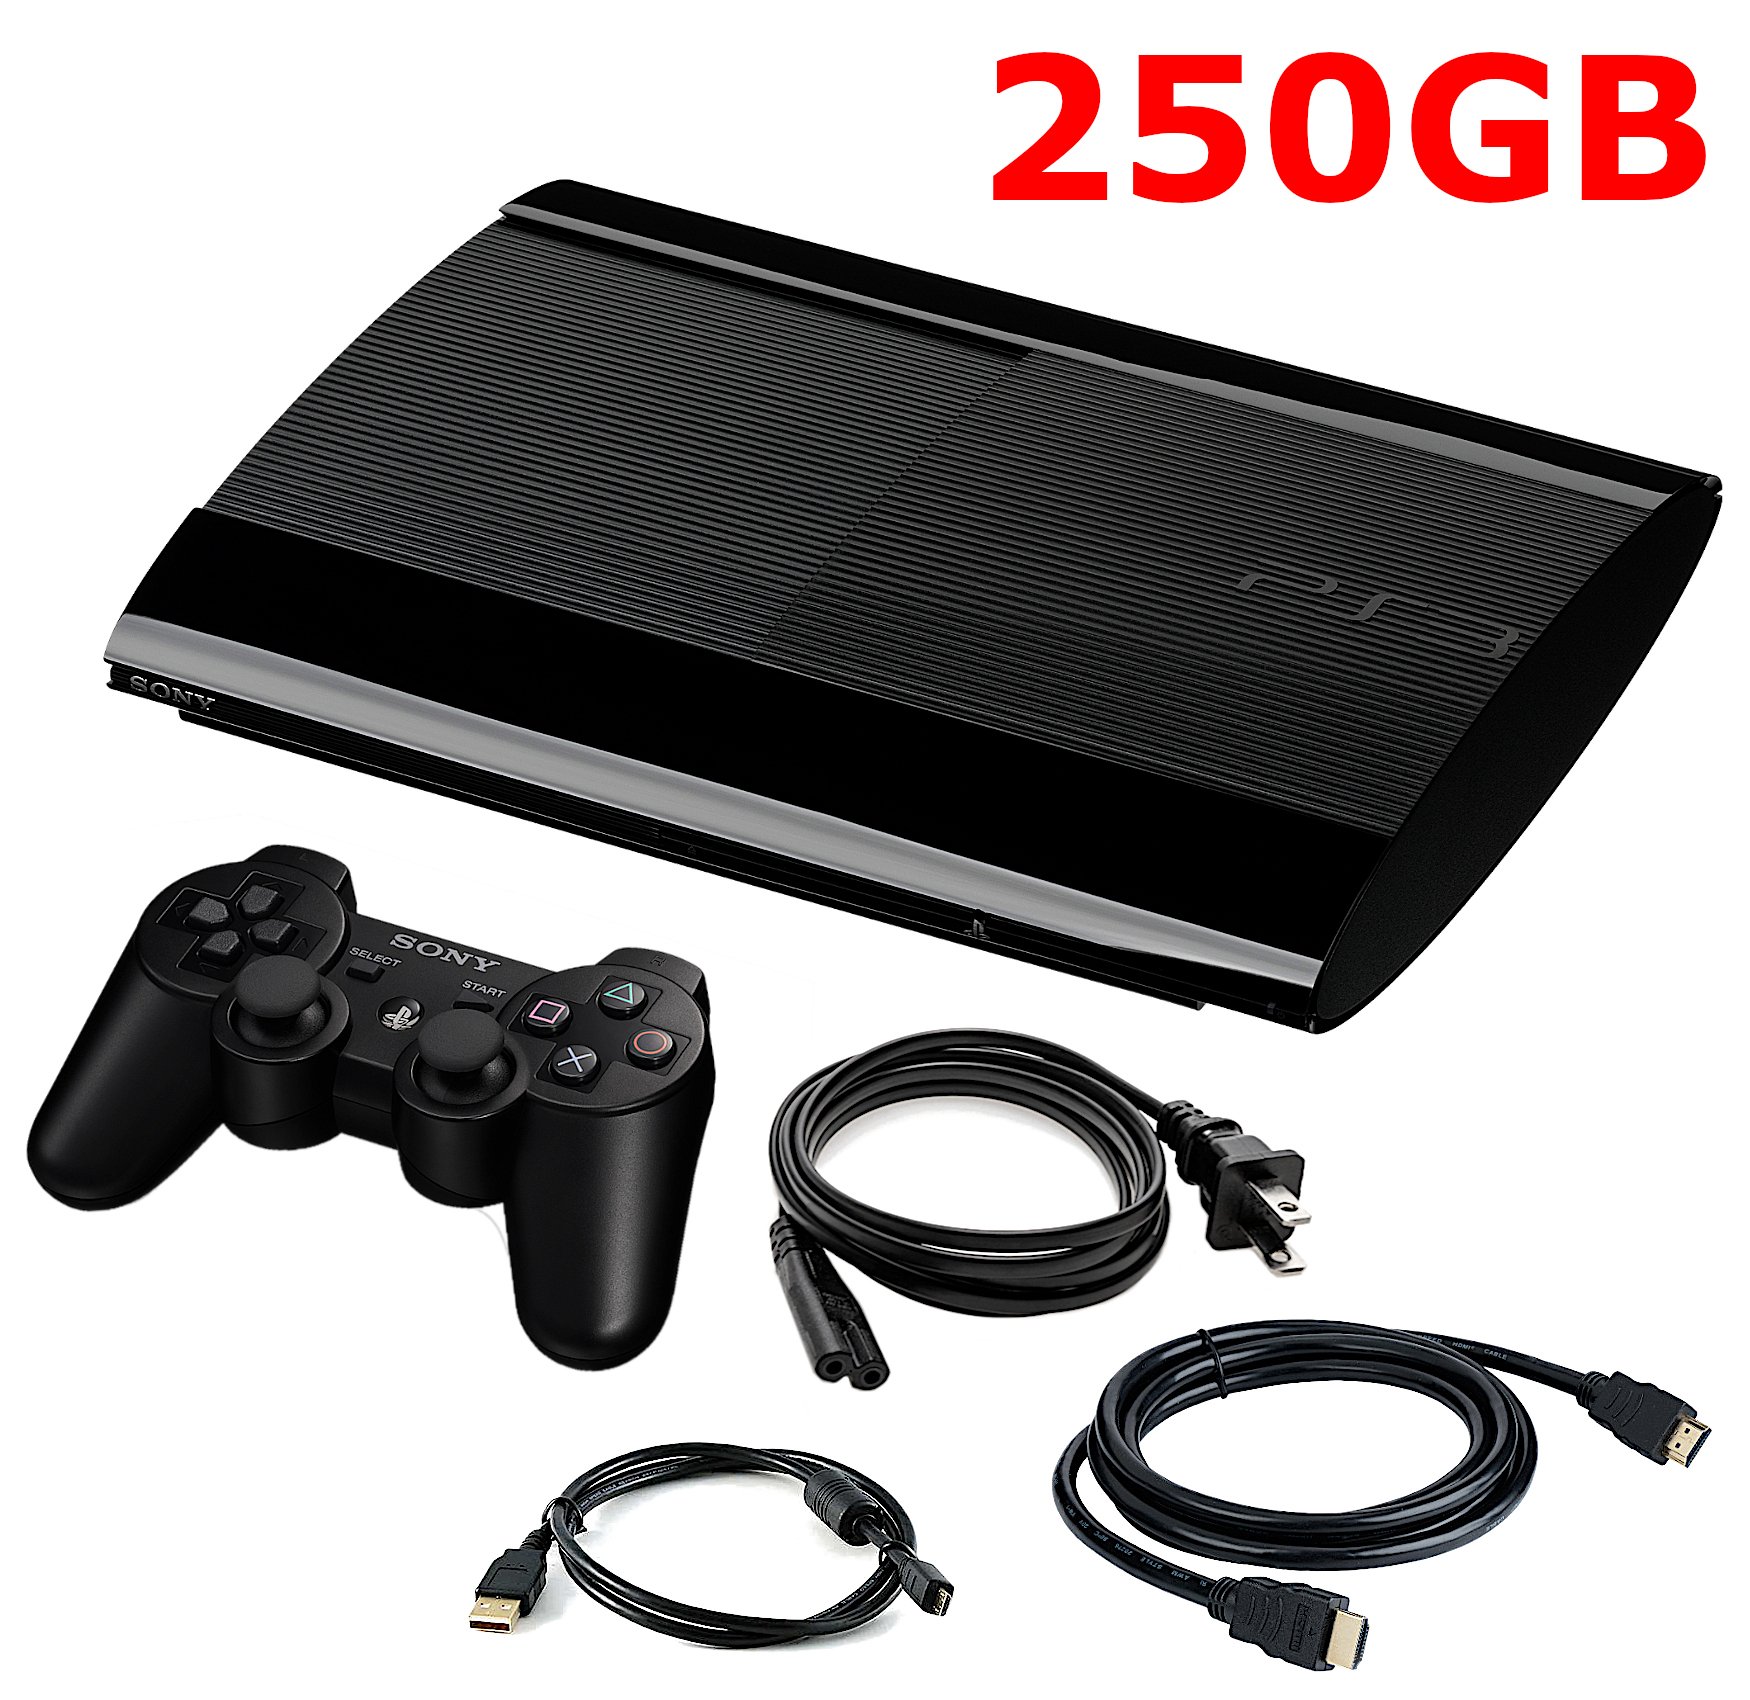 CONSOLA PS3 SLIM 250GB + MANDO